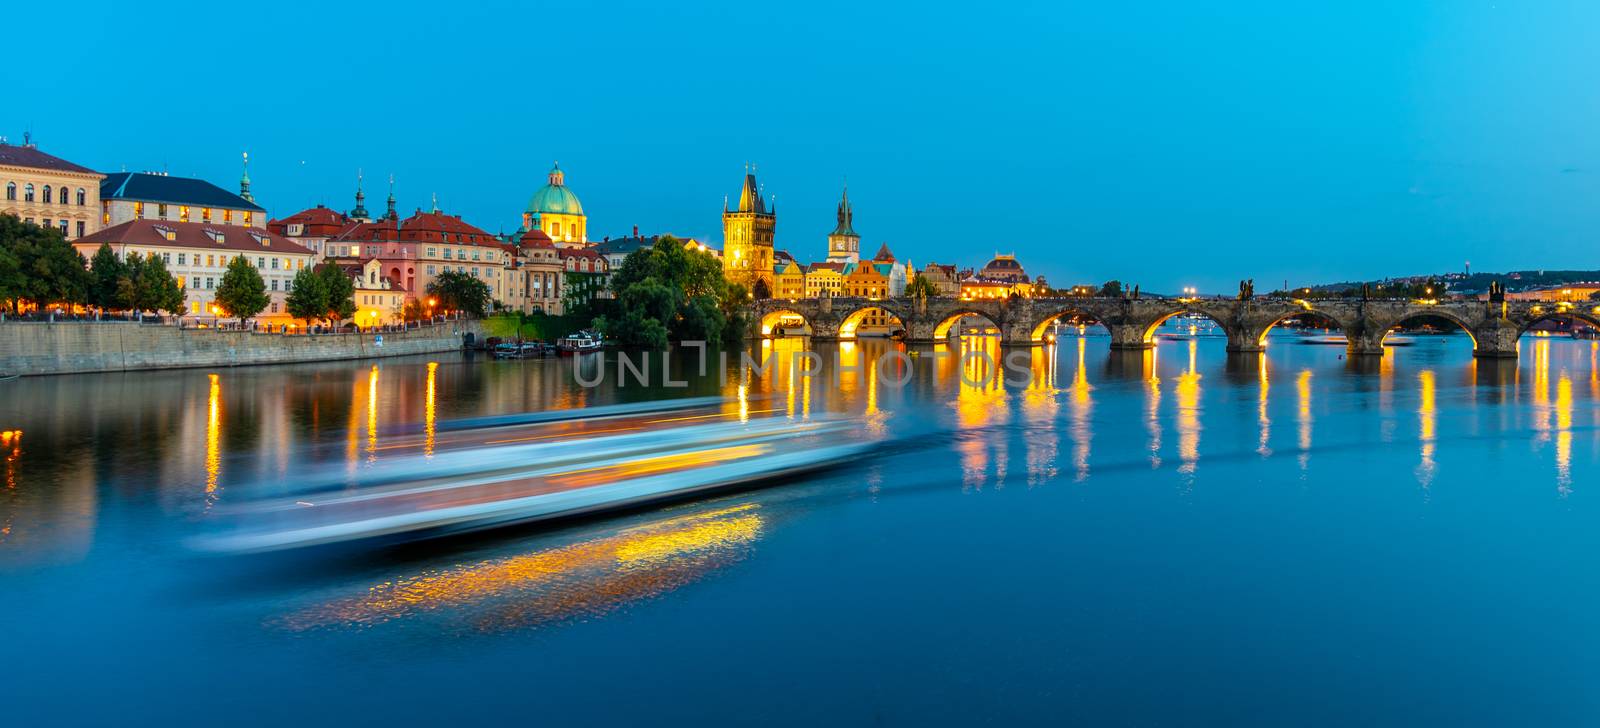 Illuminated Charles Bridge reflected and blurred tourist boat in Vltava River. Evening in Prague, Czech Republic.